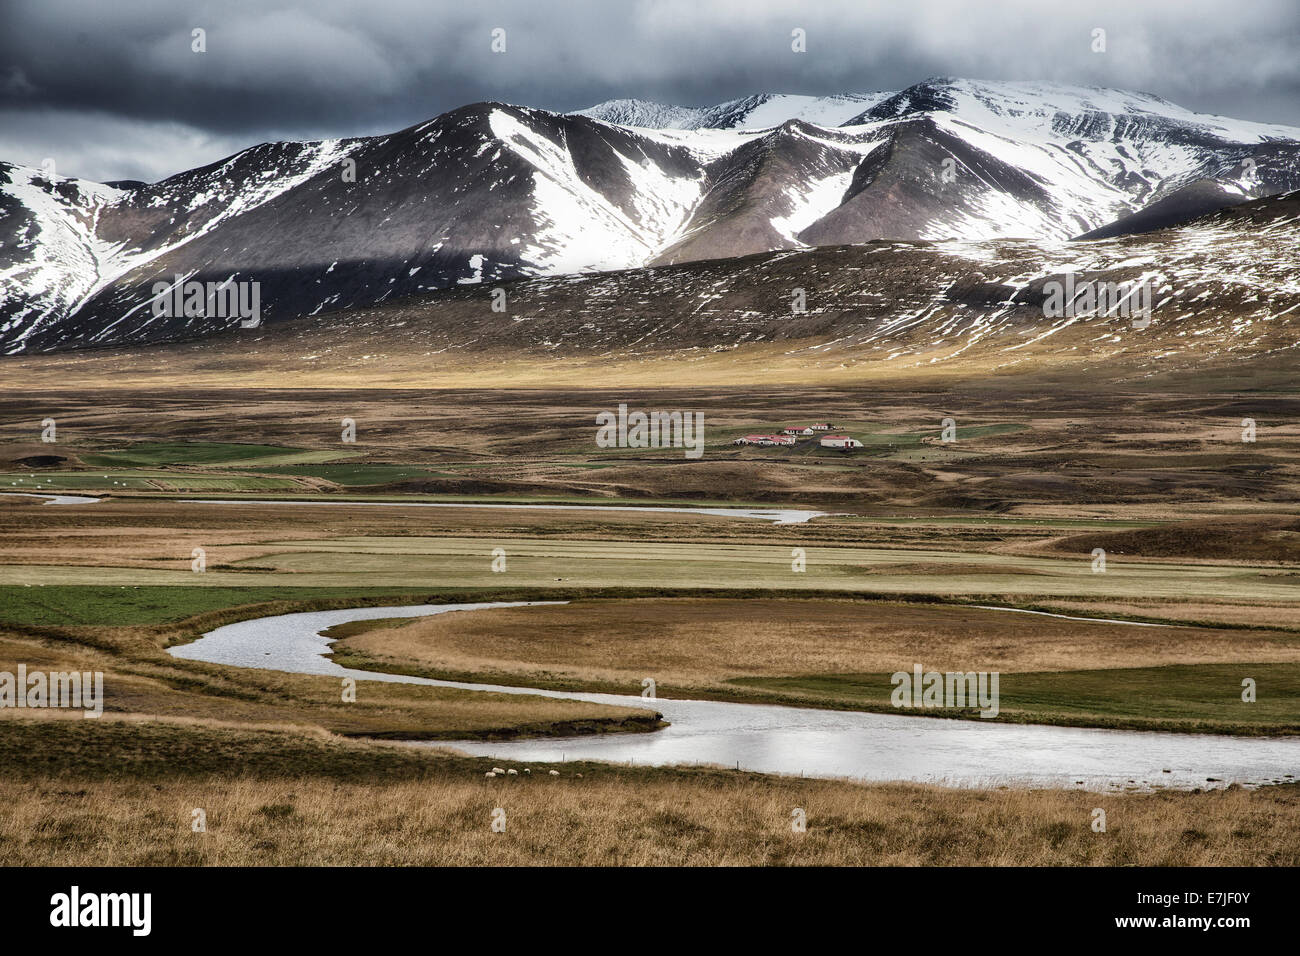 Farm, mountain, Iceland, Europe, snowy, mountain, Vididalur, Vidigerdi, scenery, landscape, Stock Photo